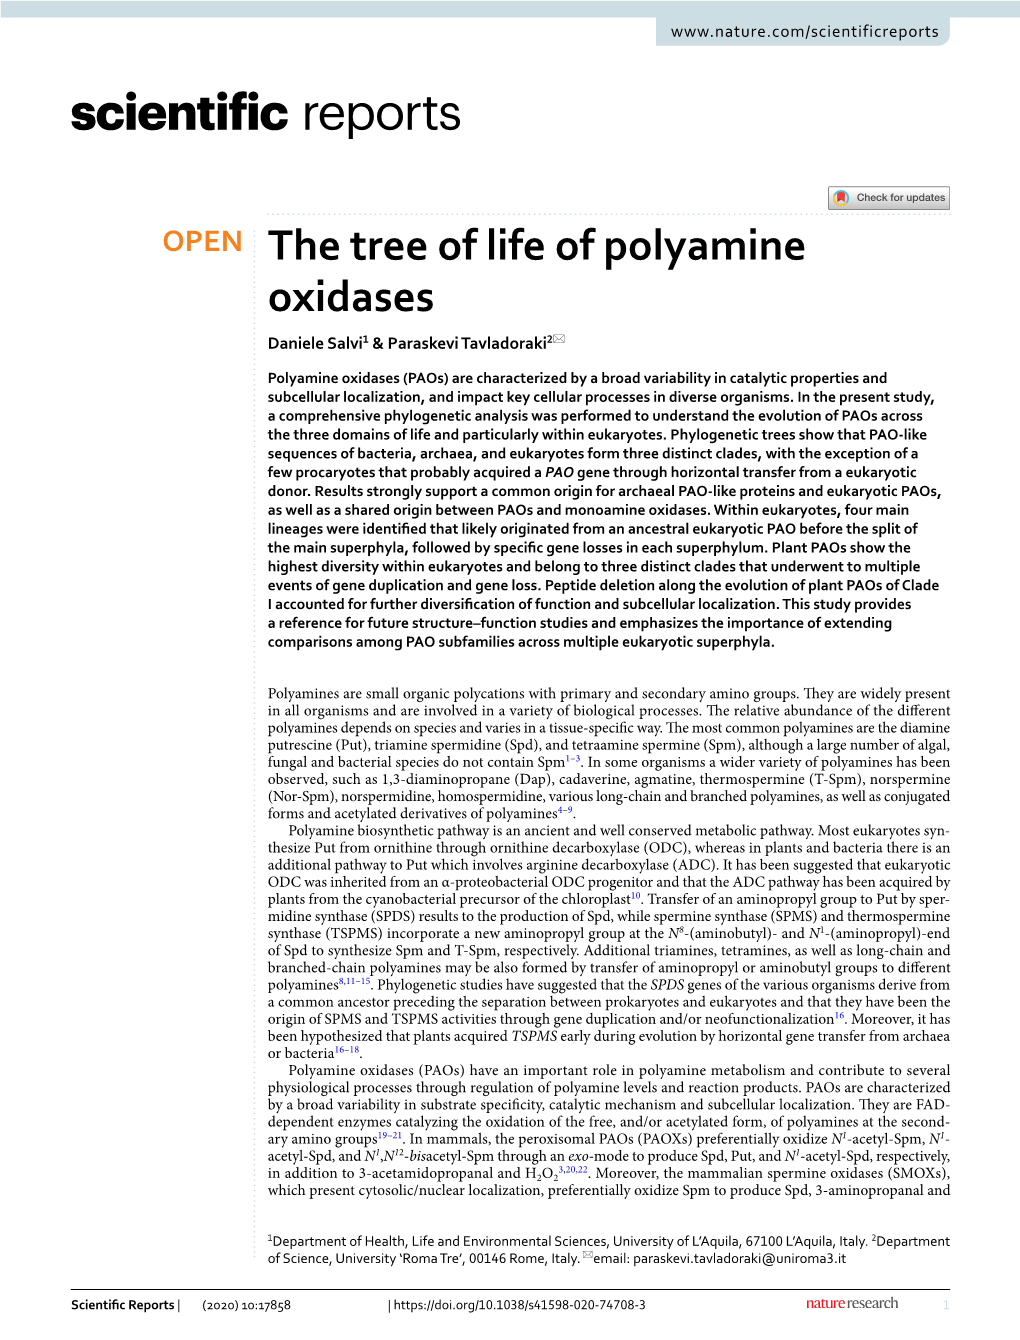 The Tree of Life of Polyamine Oxidases Daniele Salvi1 & Paraskevi Tavladoraki2*